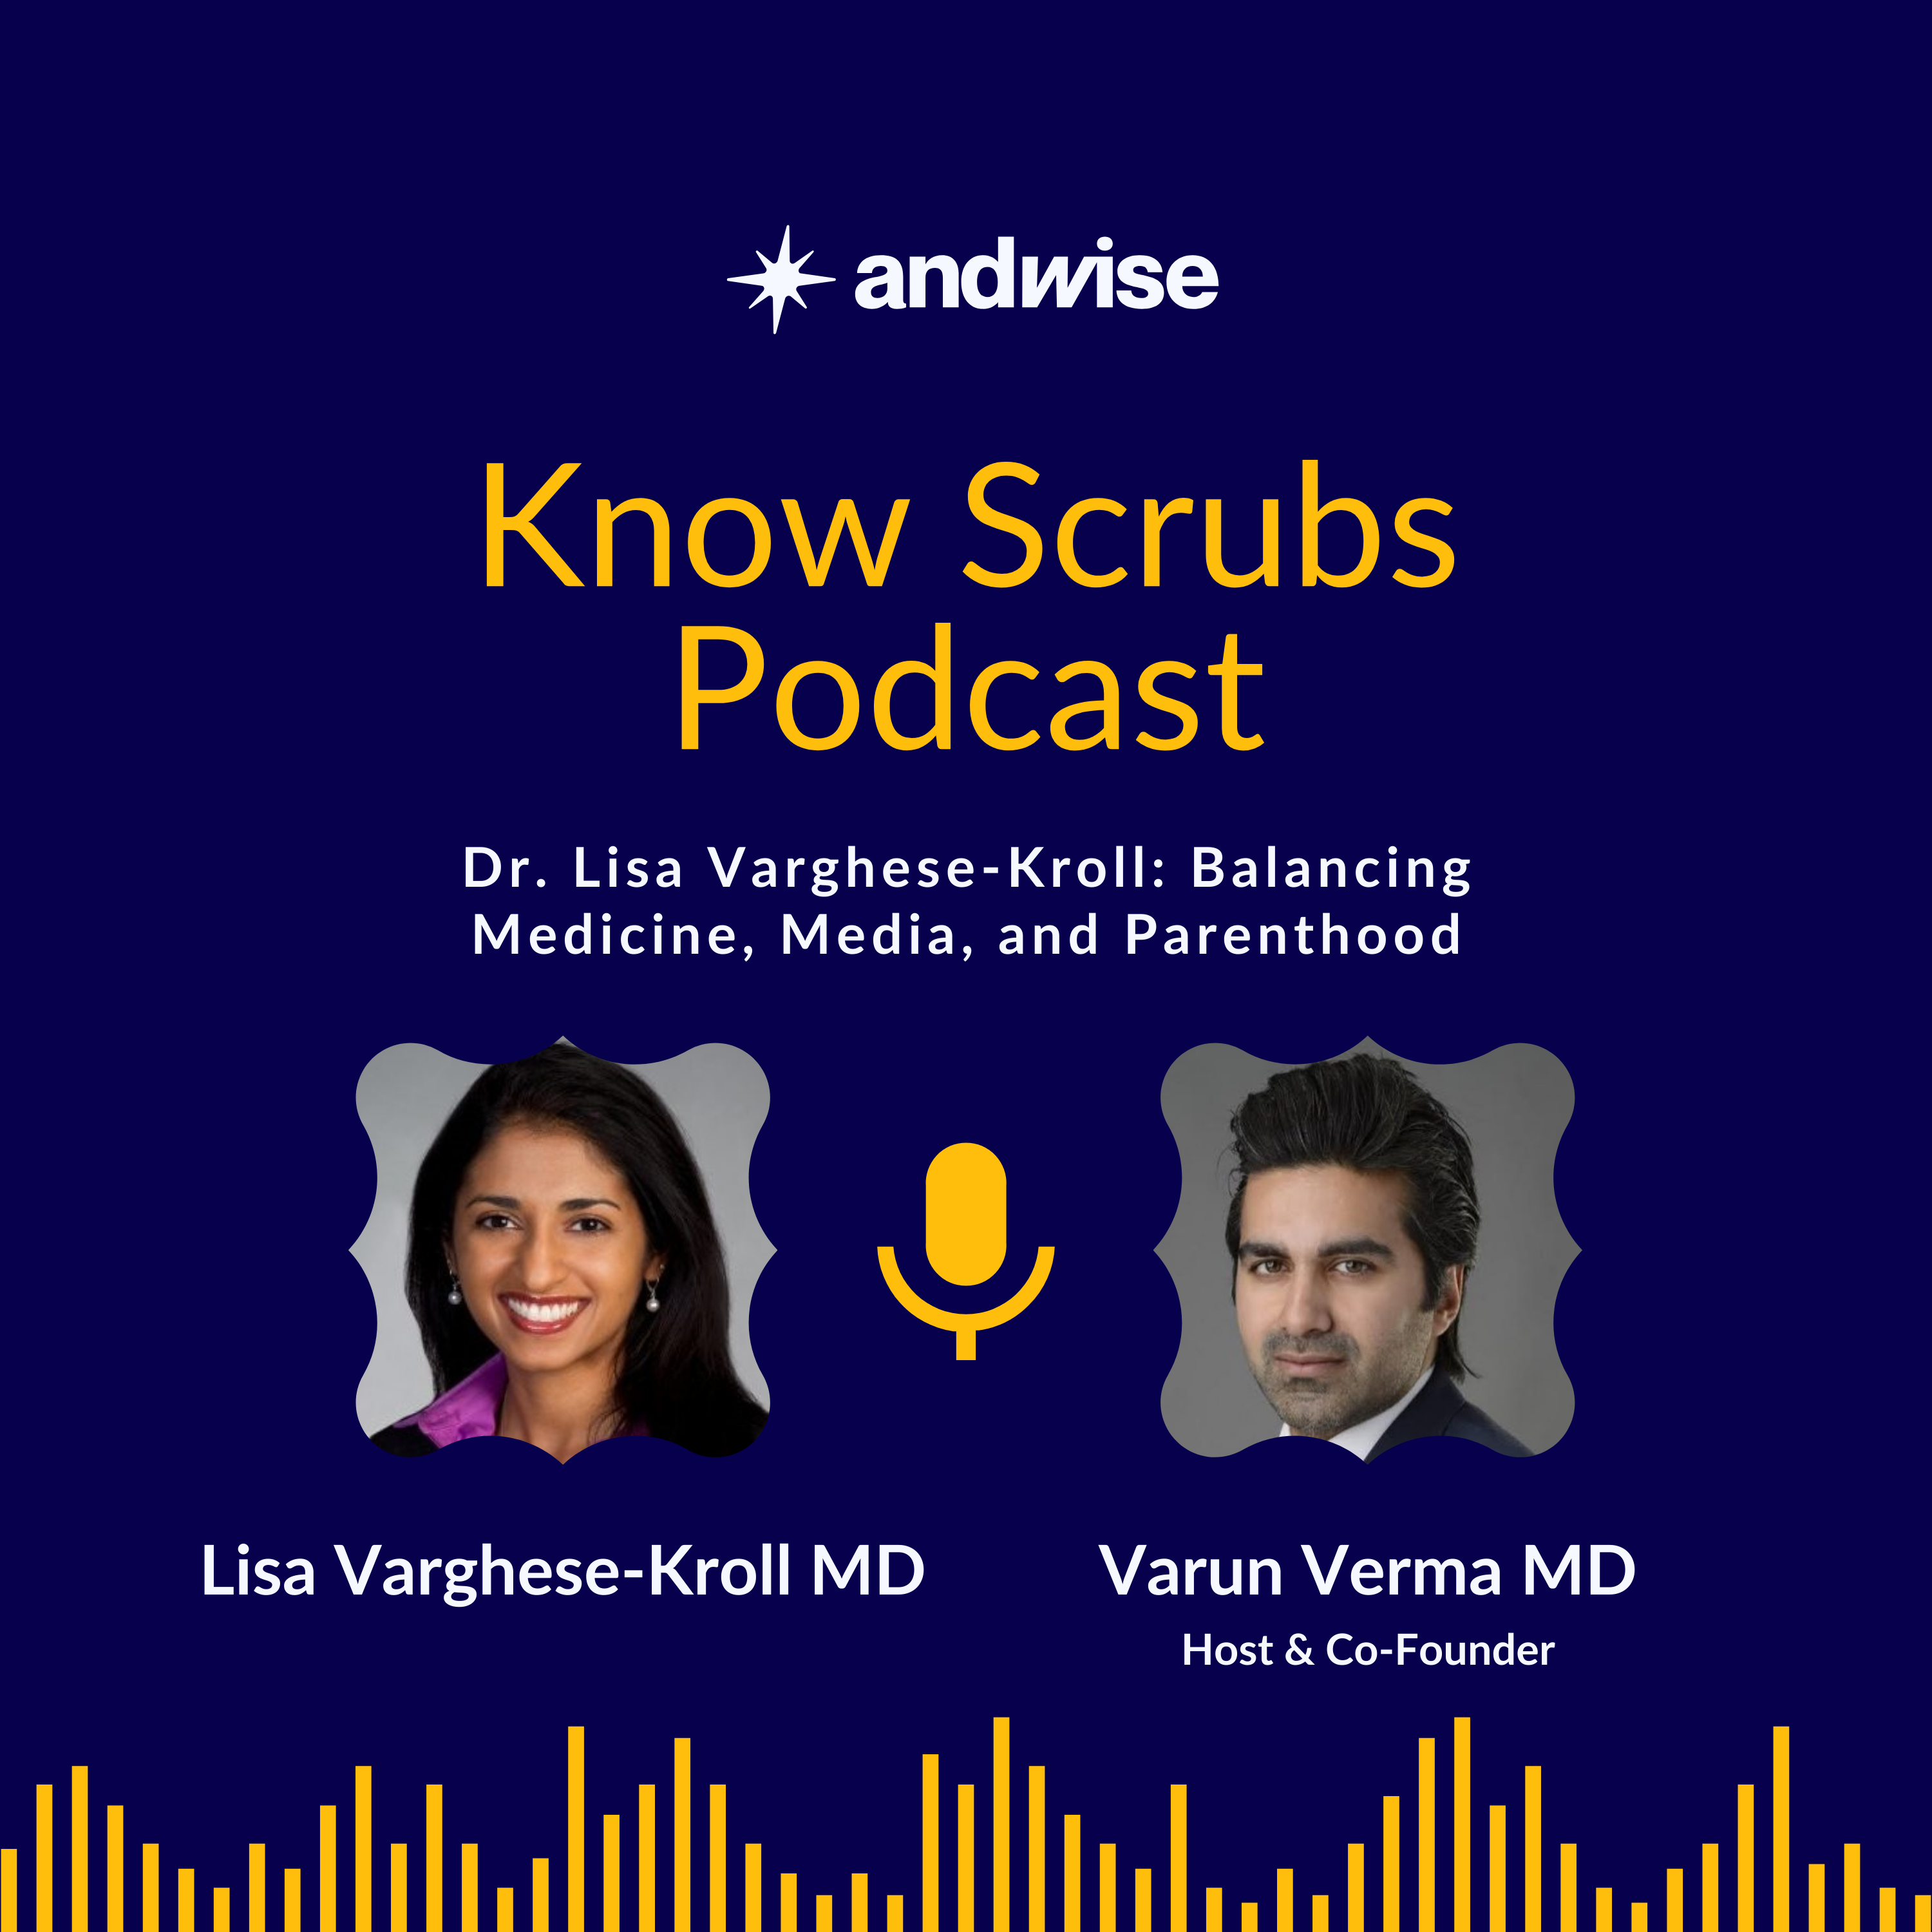 Dr. Lisa Varghese-Kroll: Balancing Medicine, Media, and Parenthood